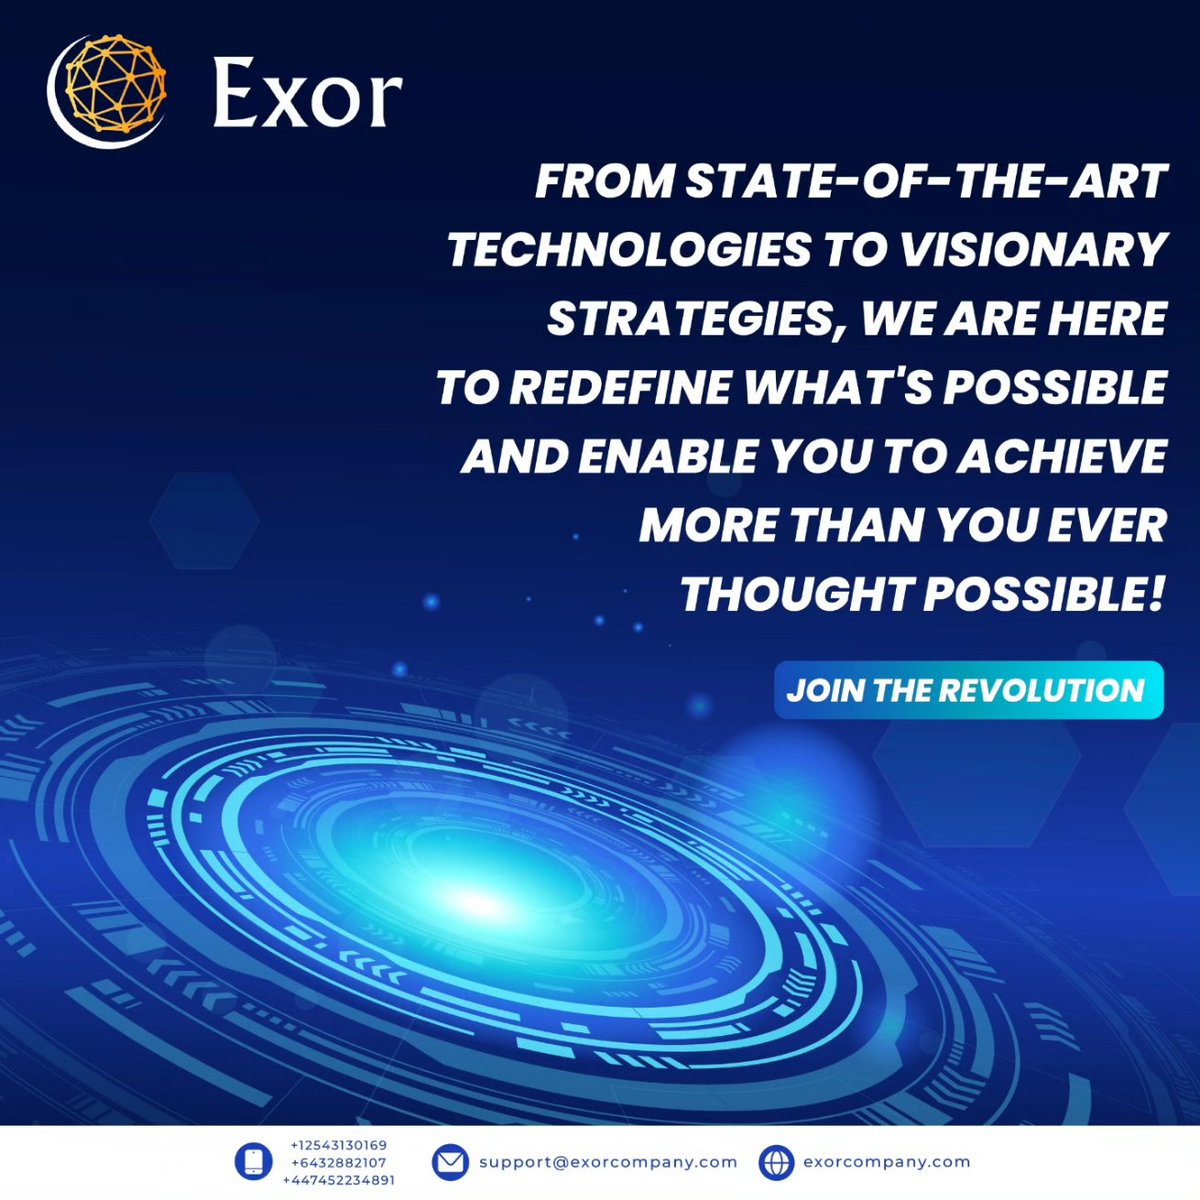 #ExorInnovation #TechRevolution #VisionaryStrategies #RedefiningPossibilities #FutureForward #InnovateWithExor'